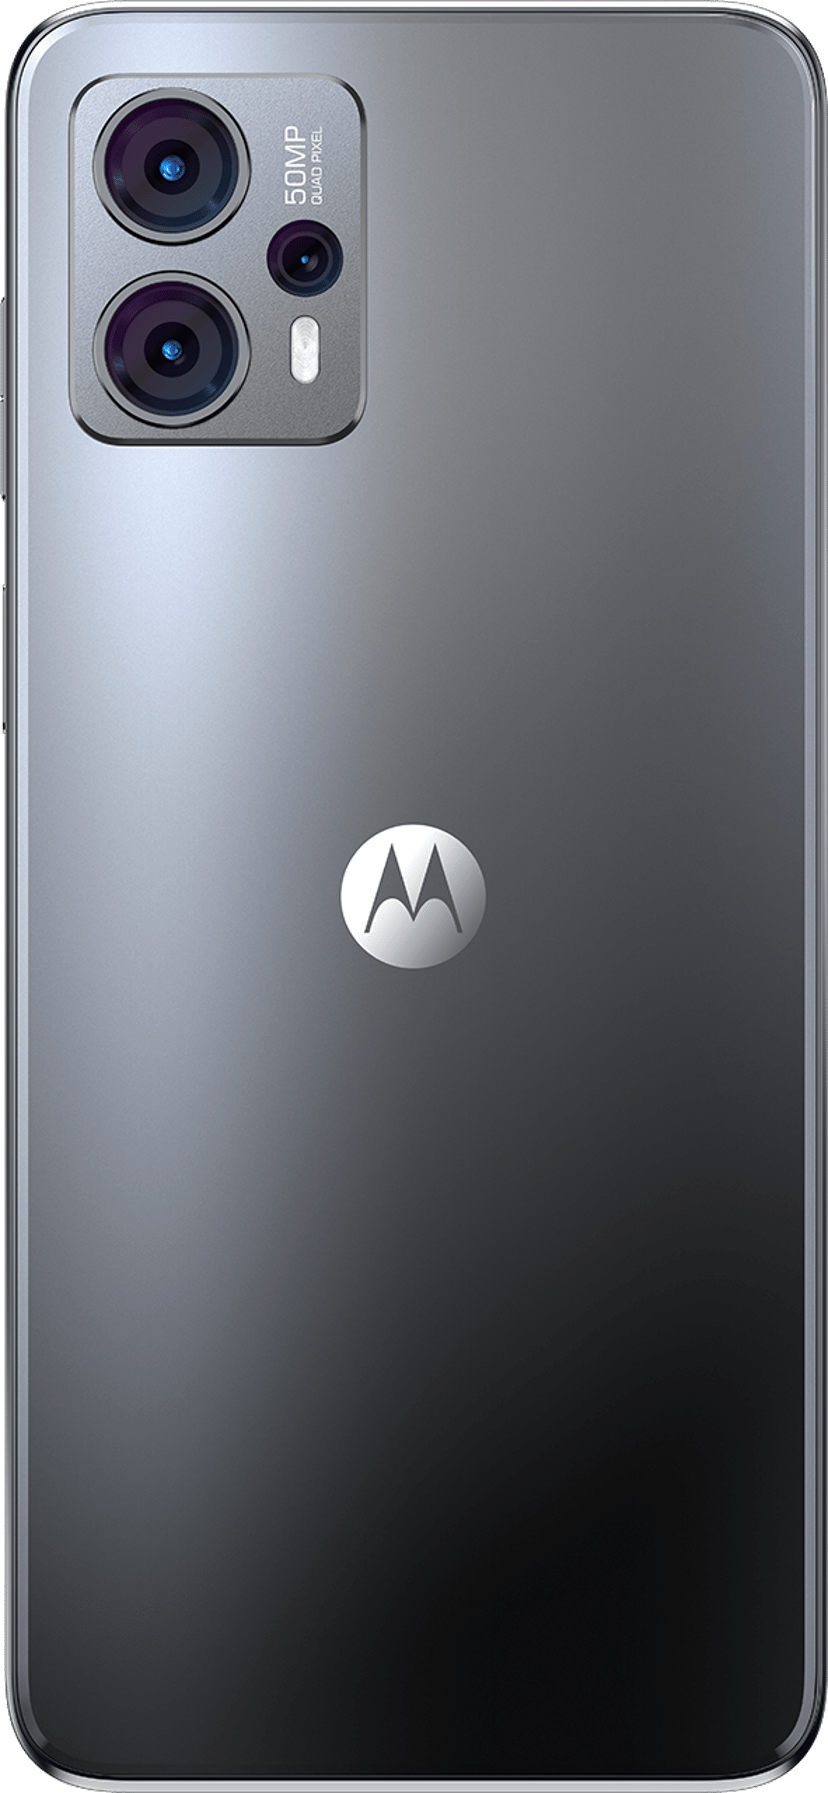 Motorola Moto G23 128GB Puuhiili